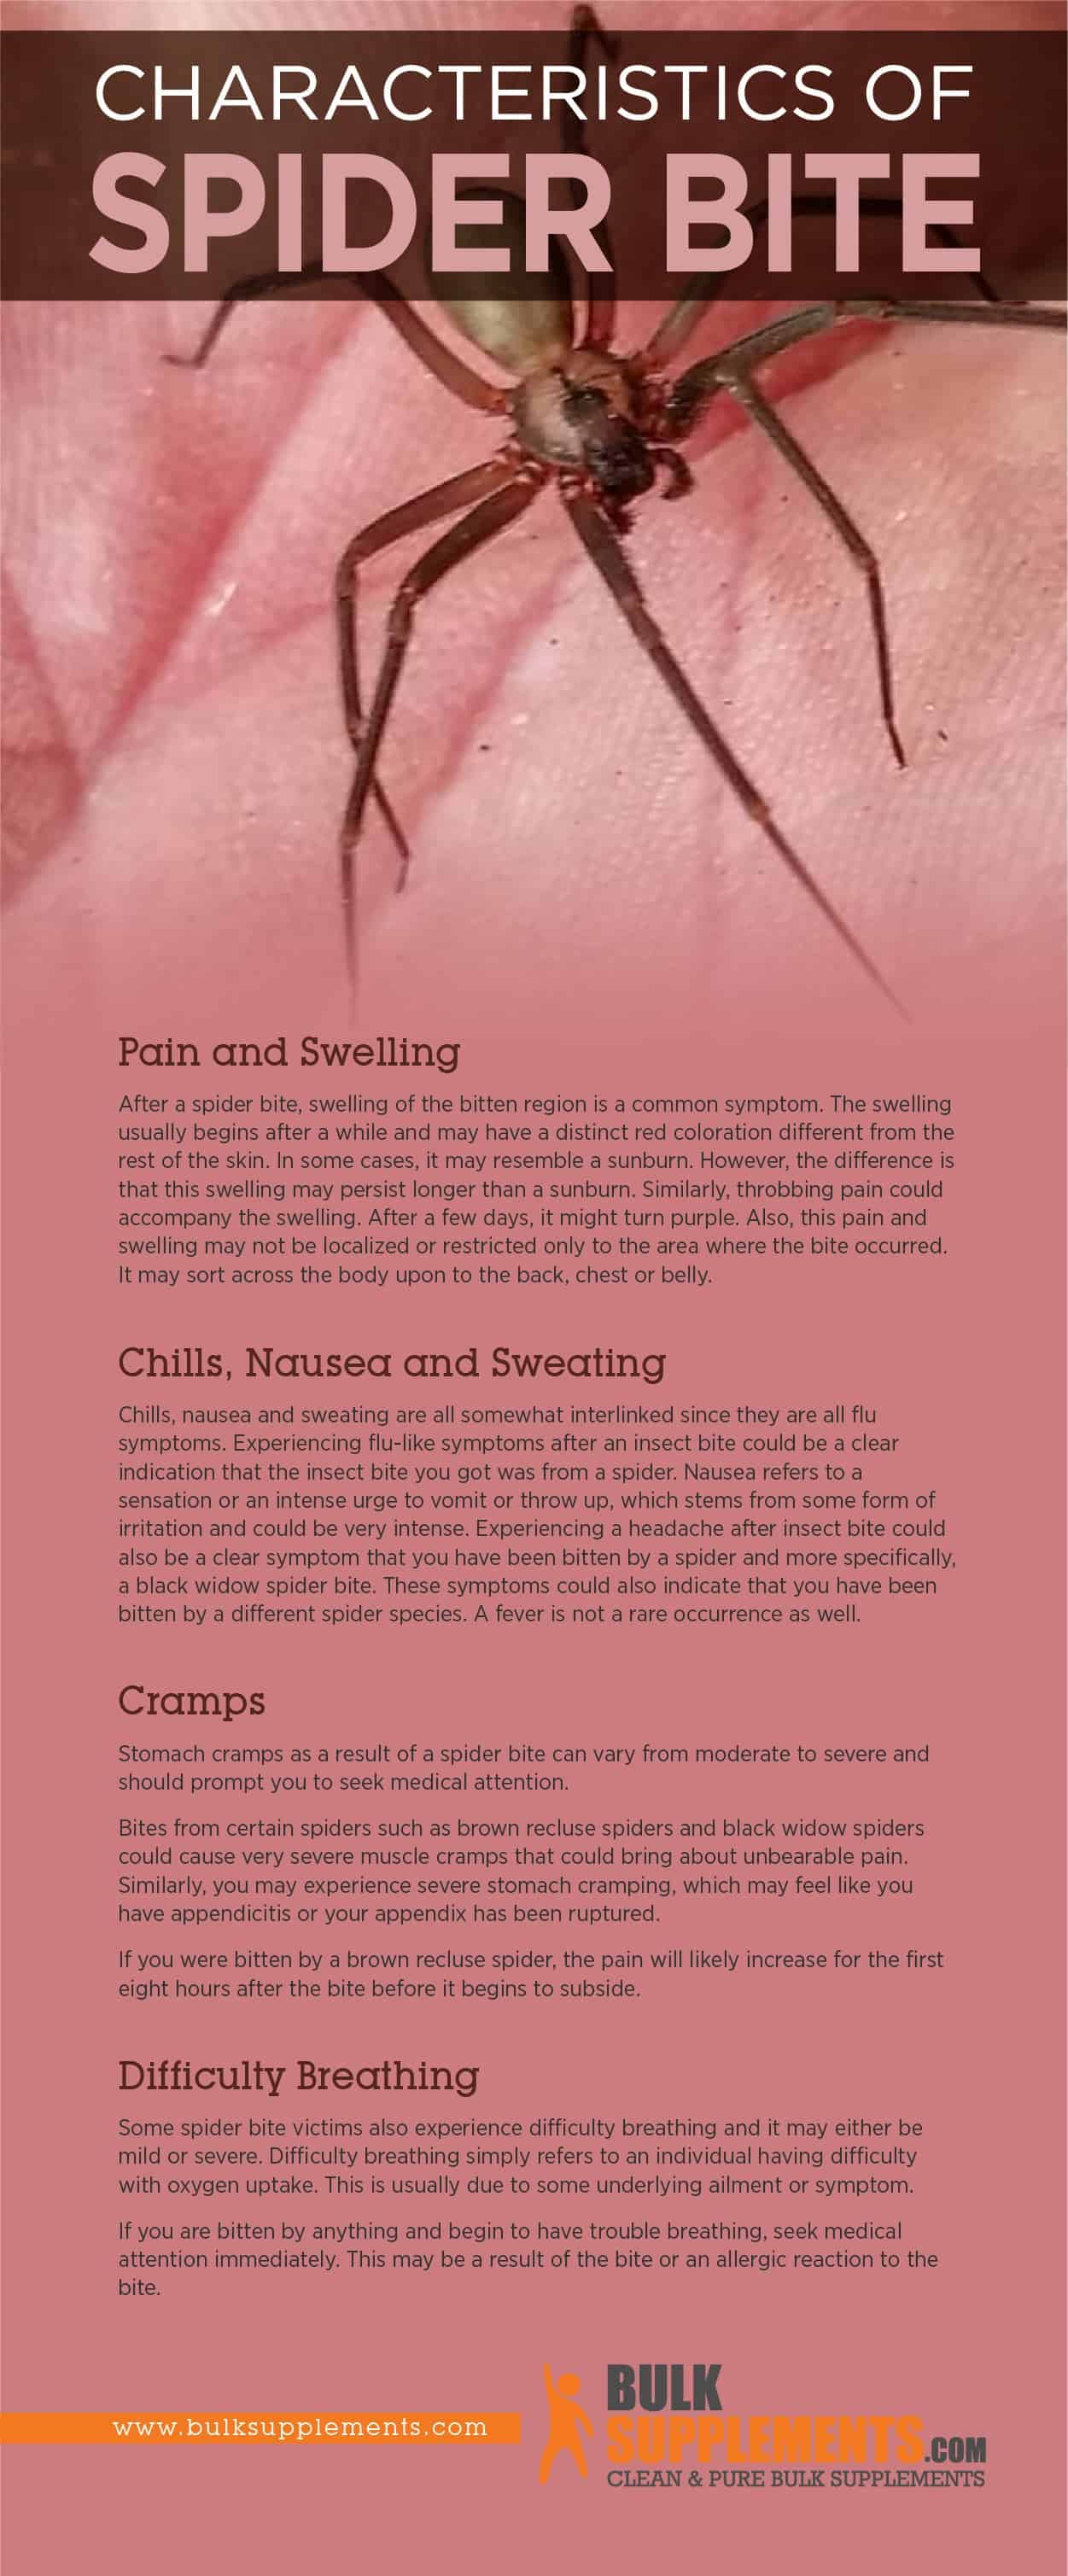 Spider Bite: Characteristics, Causes & Treatment by James Denlinger